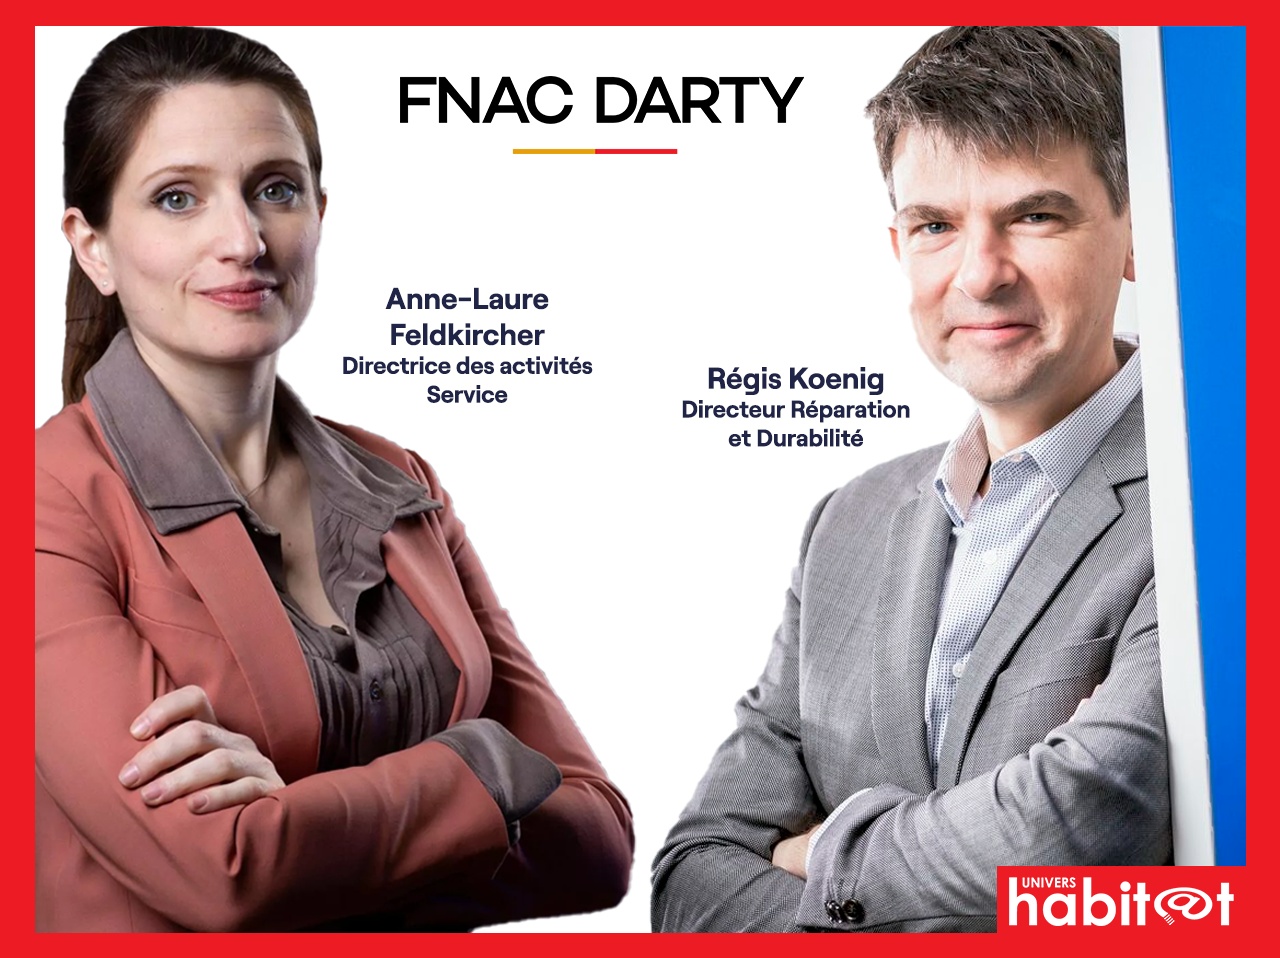 Anne-Laure Feldkircher et Régis Koenig promus chez Fnac Darty